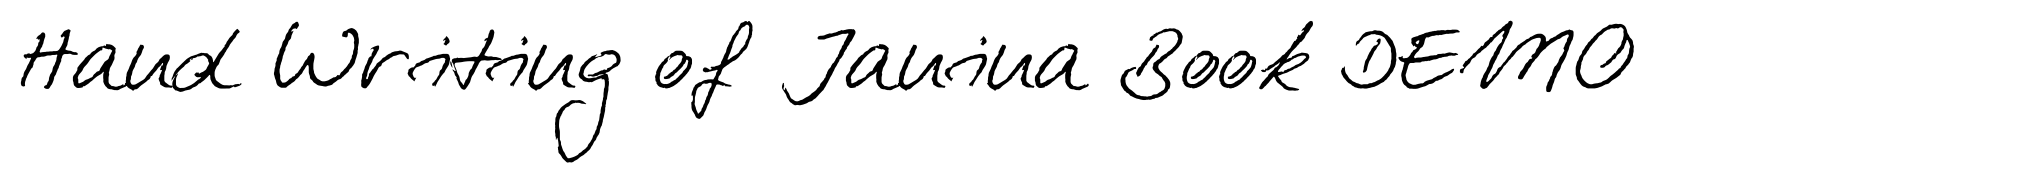 Hand Writing of Janina Book DEMO image